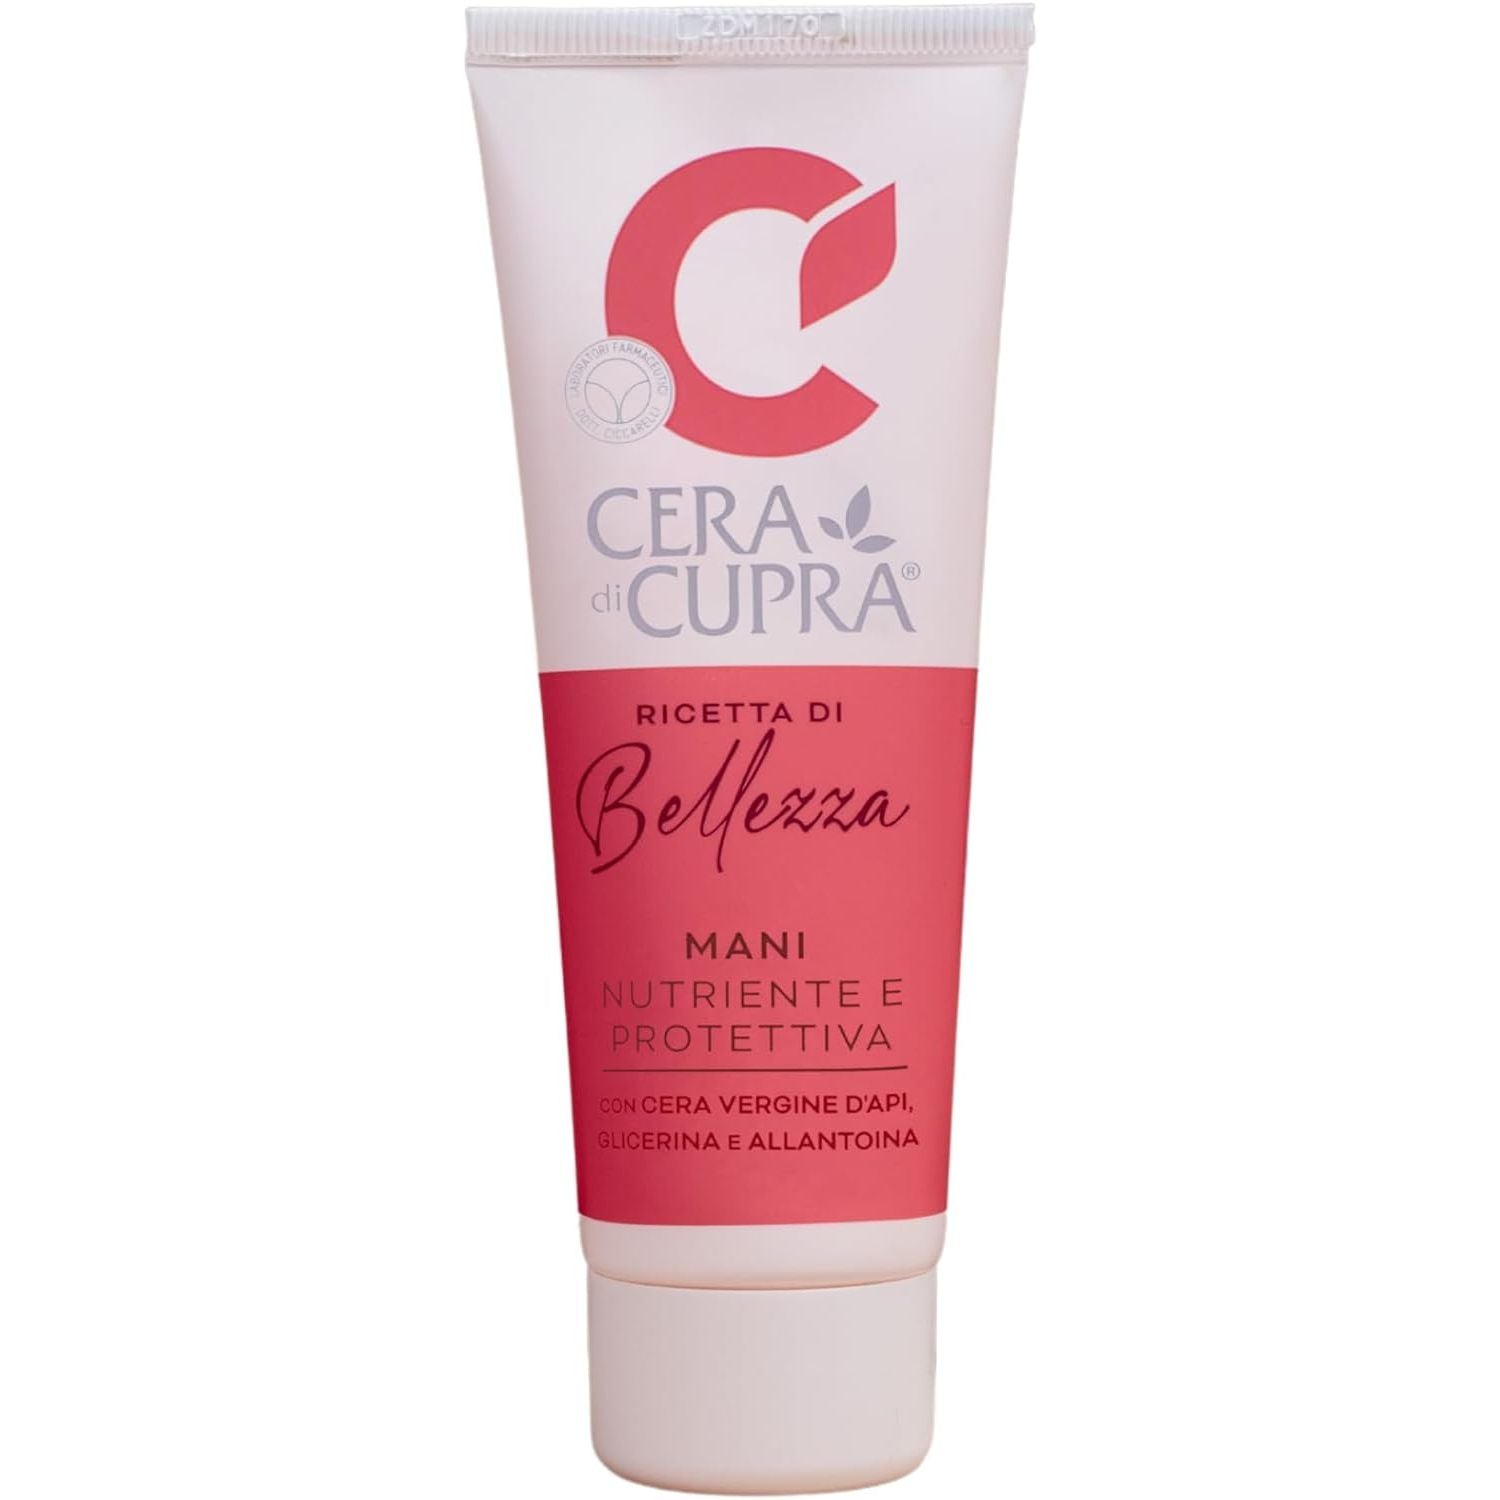 CERA di CUPRA Hand Cream 75ml Protective effect with pure beeswax – Made In  Eatalia